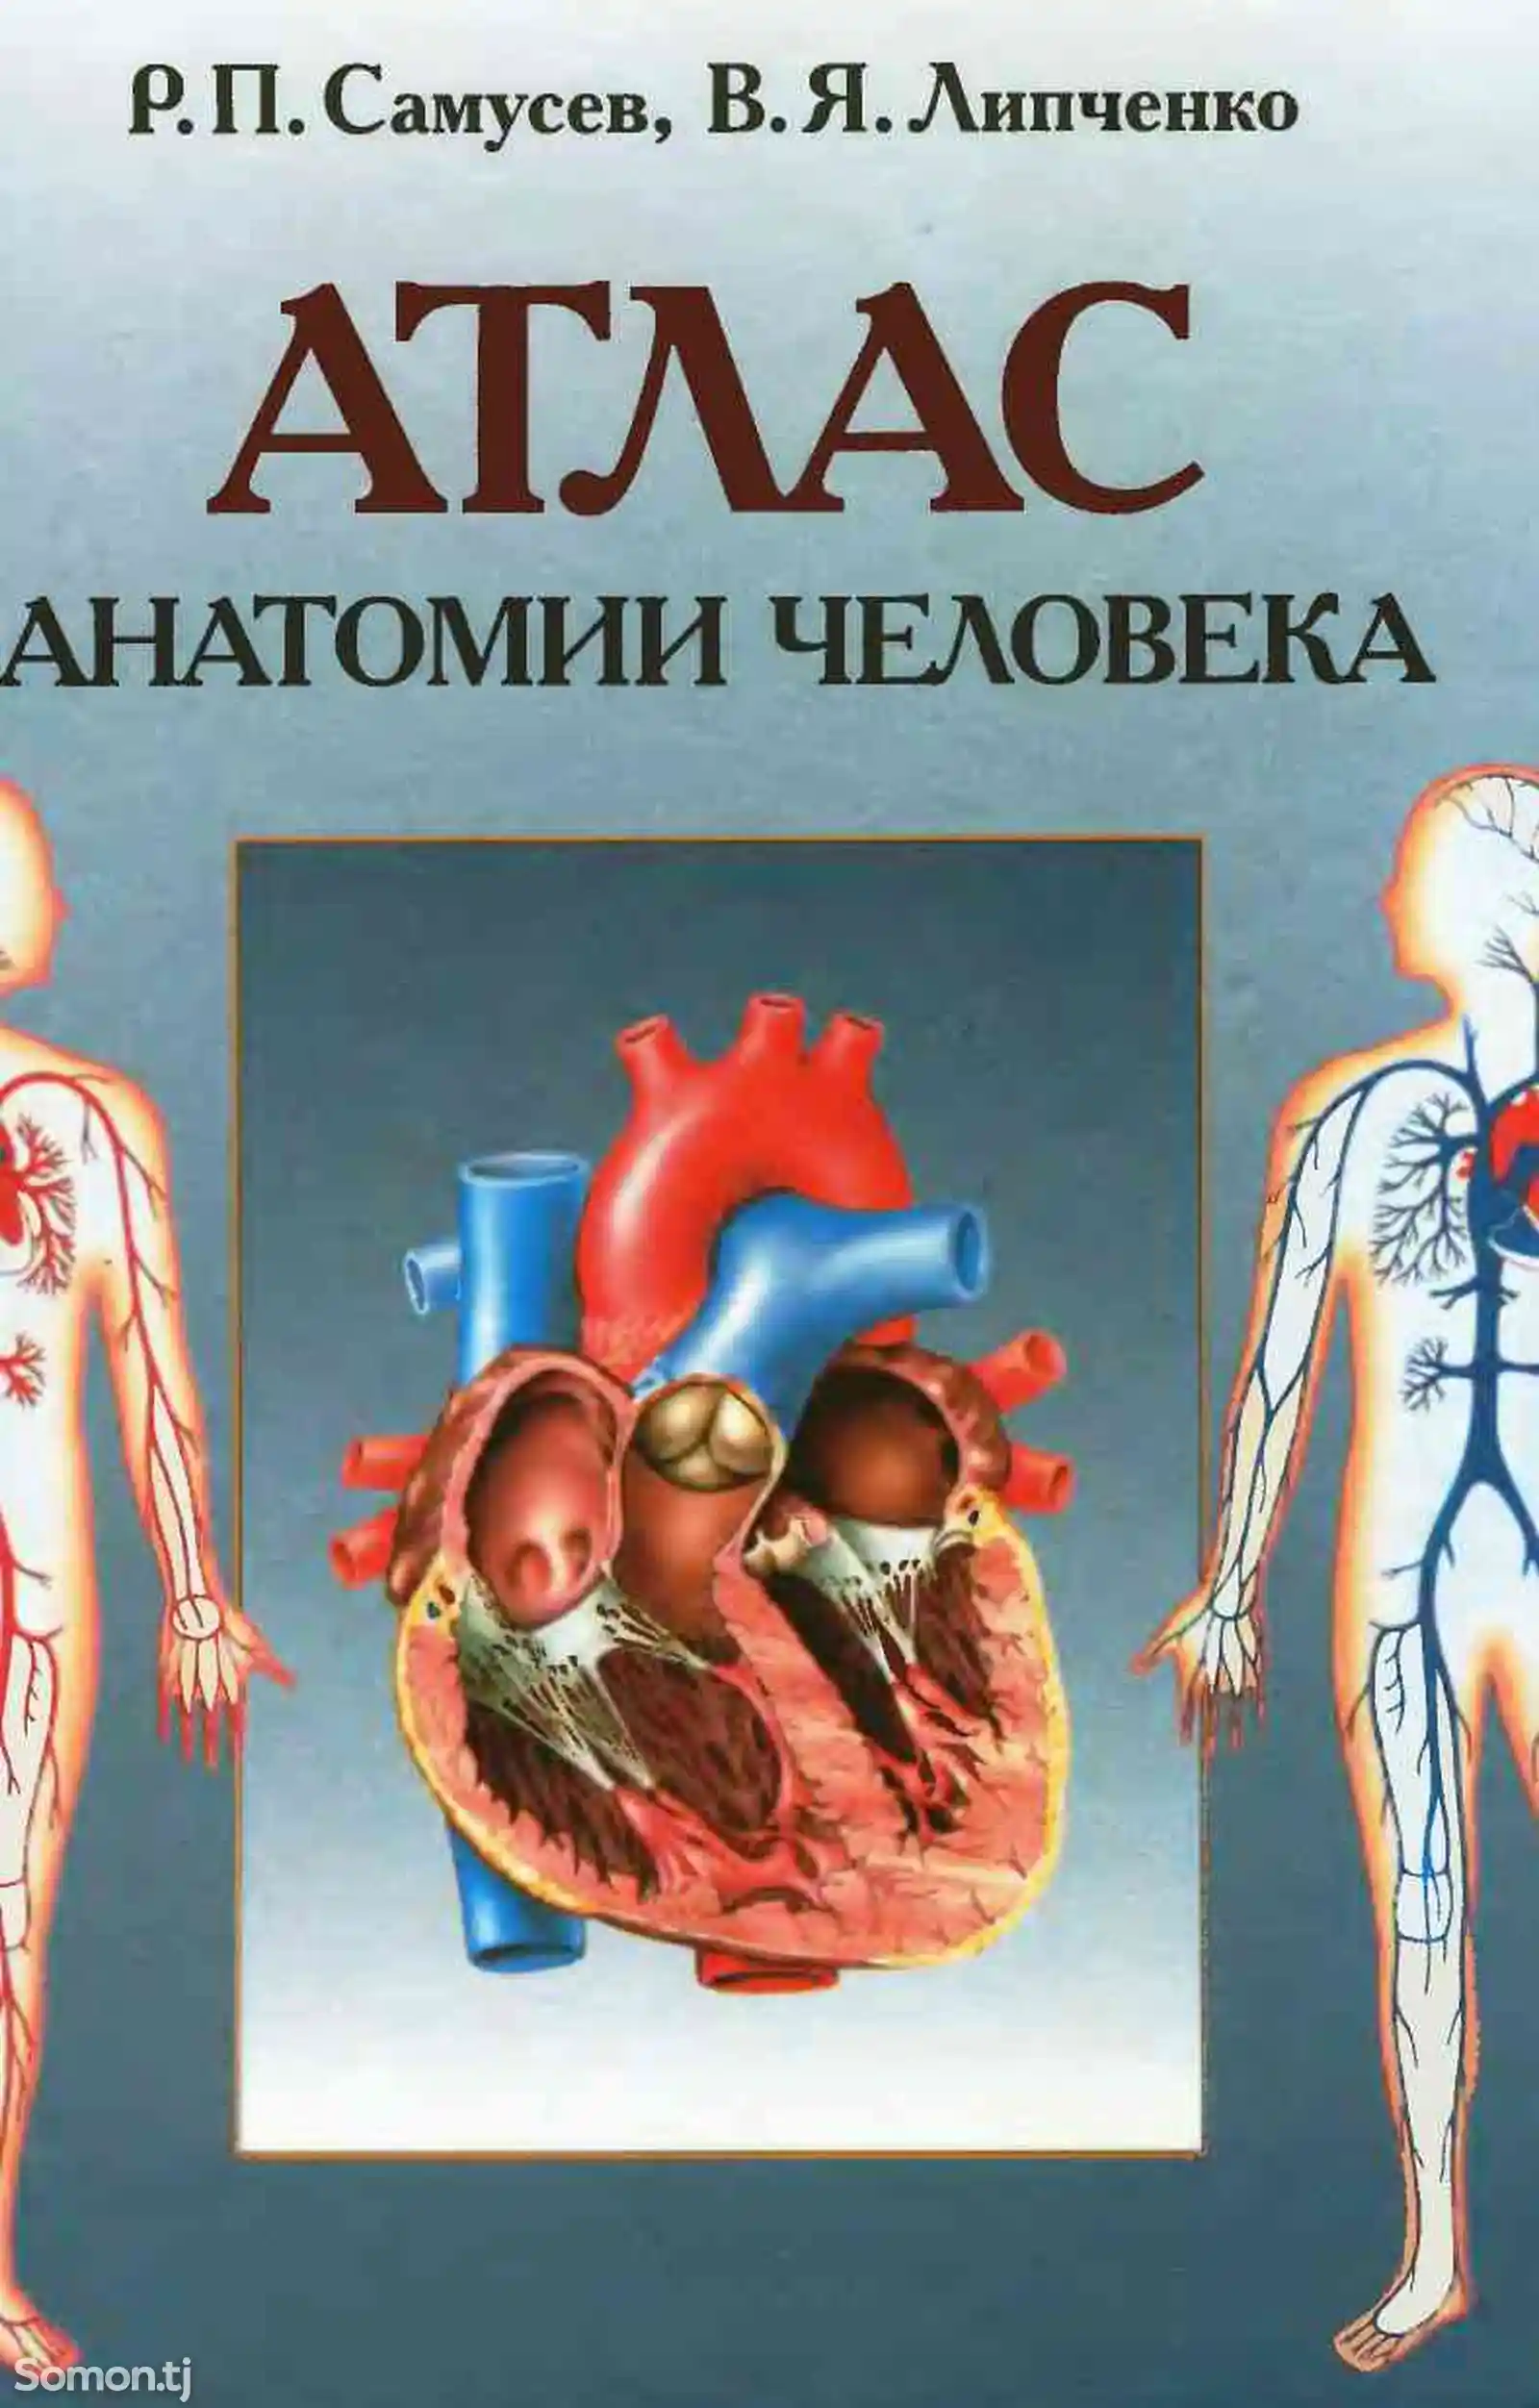 Книга Атлас Анатомии человека-1